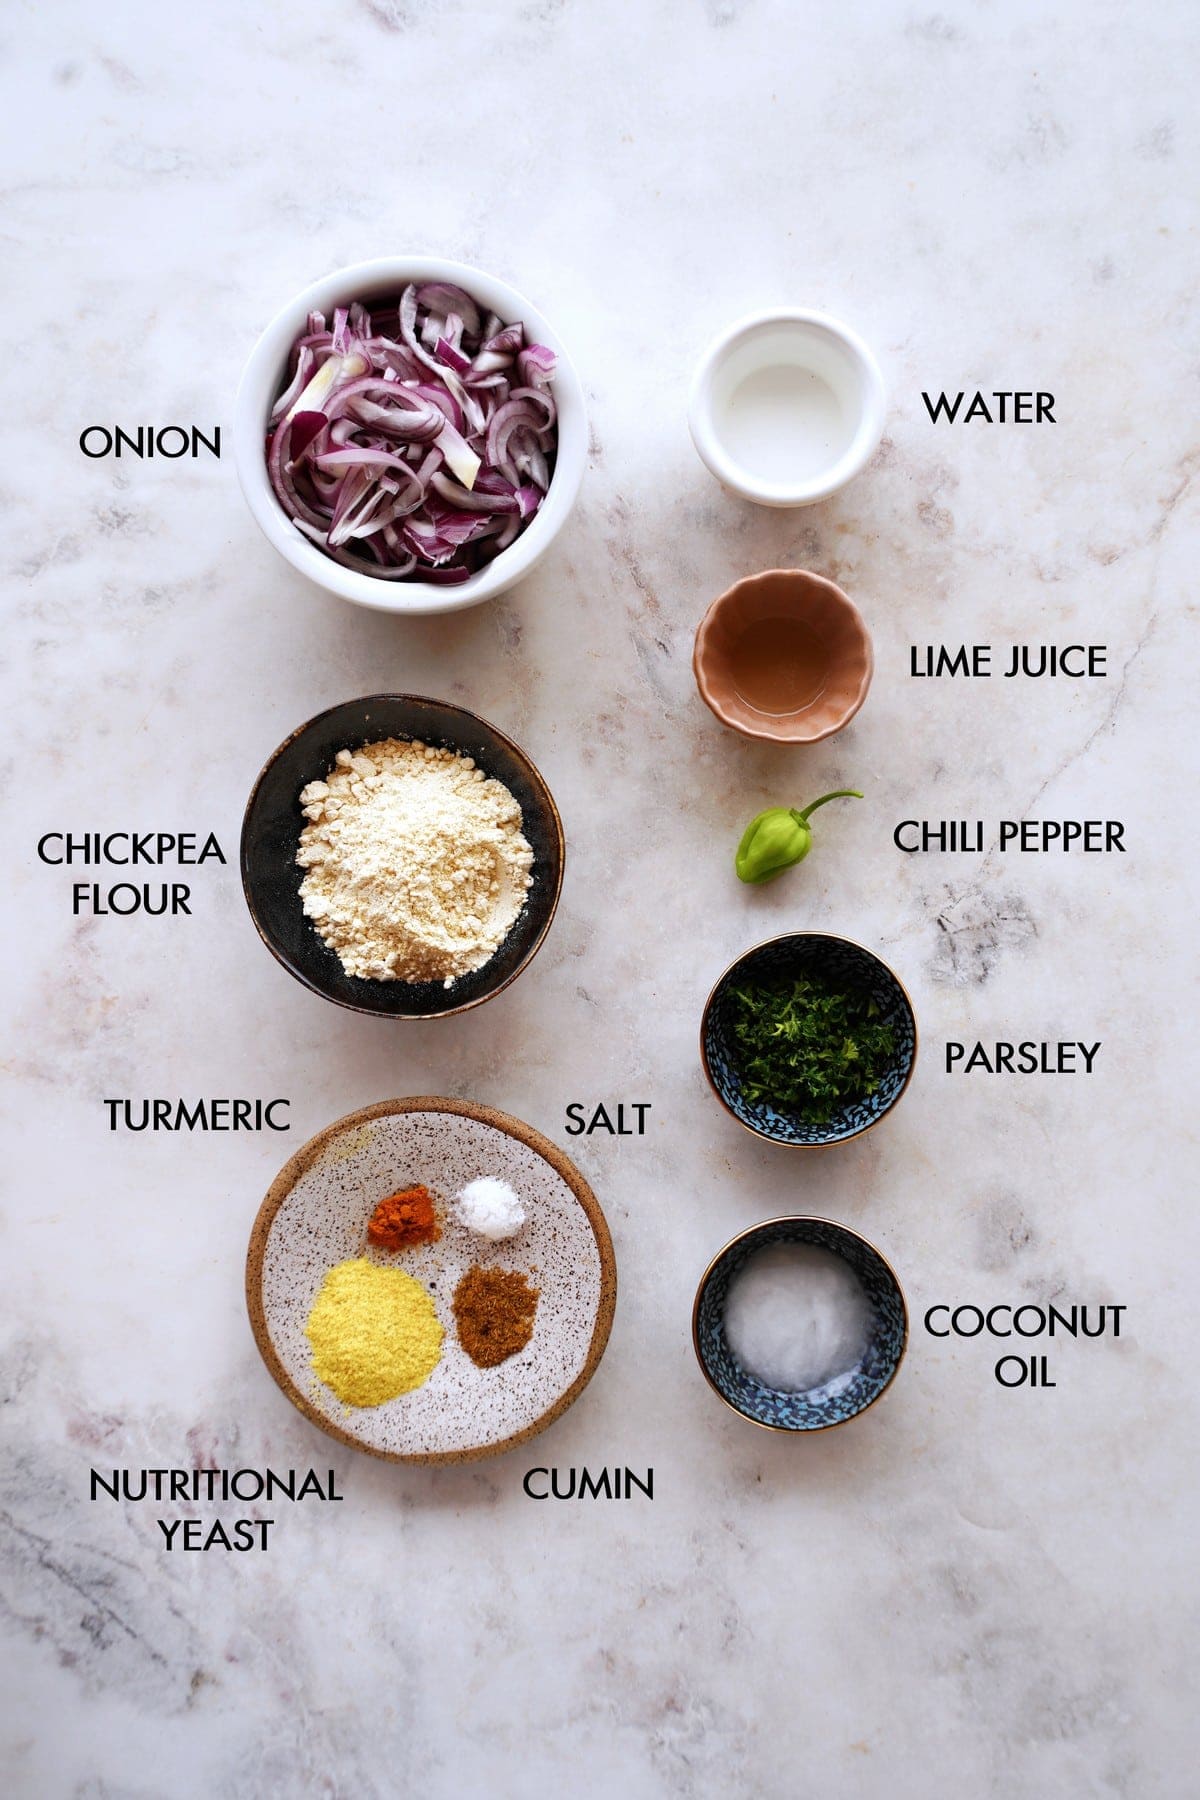 ingredients for onion bhaji